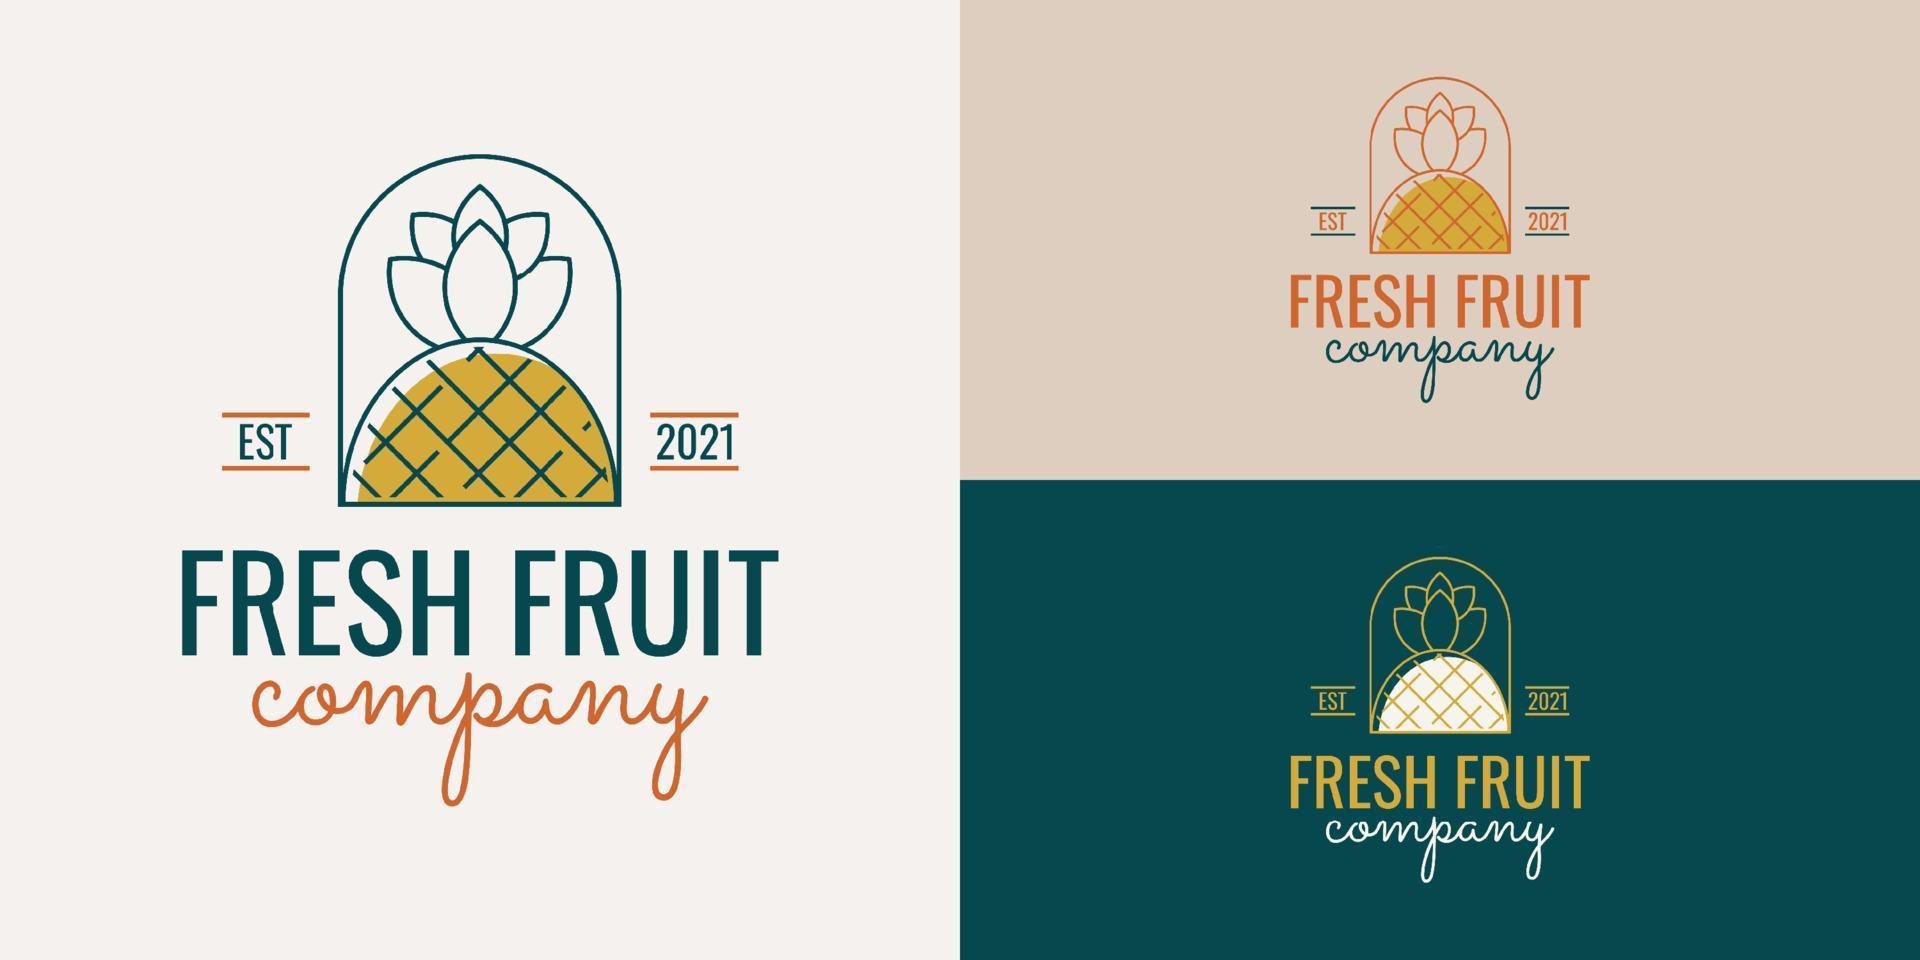 Fresh fruit company pineapple logo template design vector